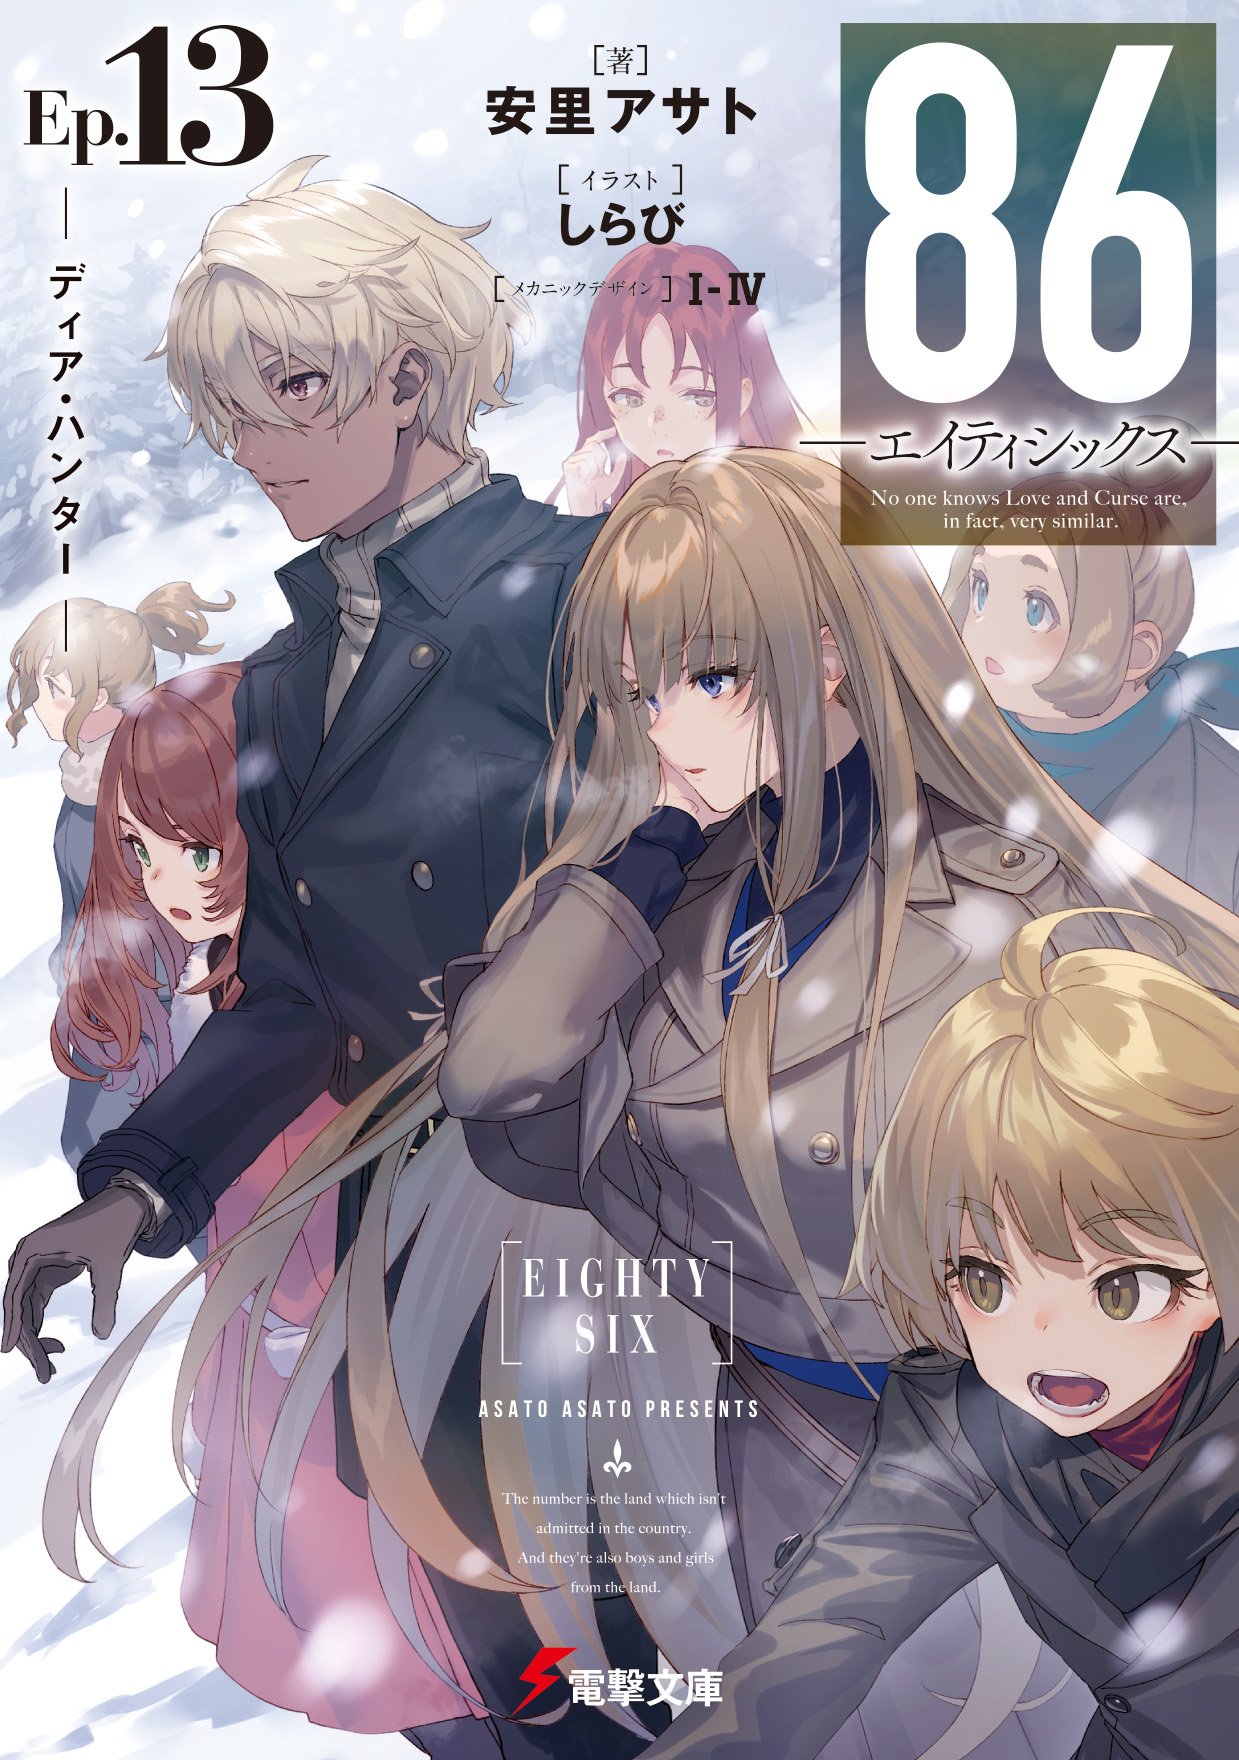 Manga Mogura RE on X: Isekai Yakkyoku light novel series by Liz Takayama  has 2,3 million copies (including manga adaptation) in circulation.   / X